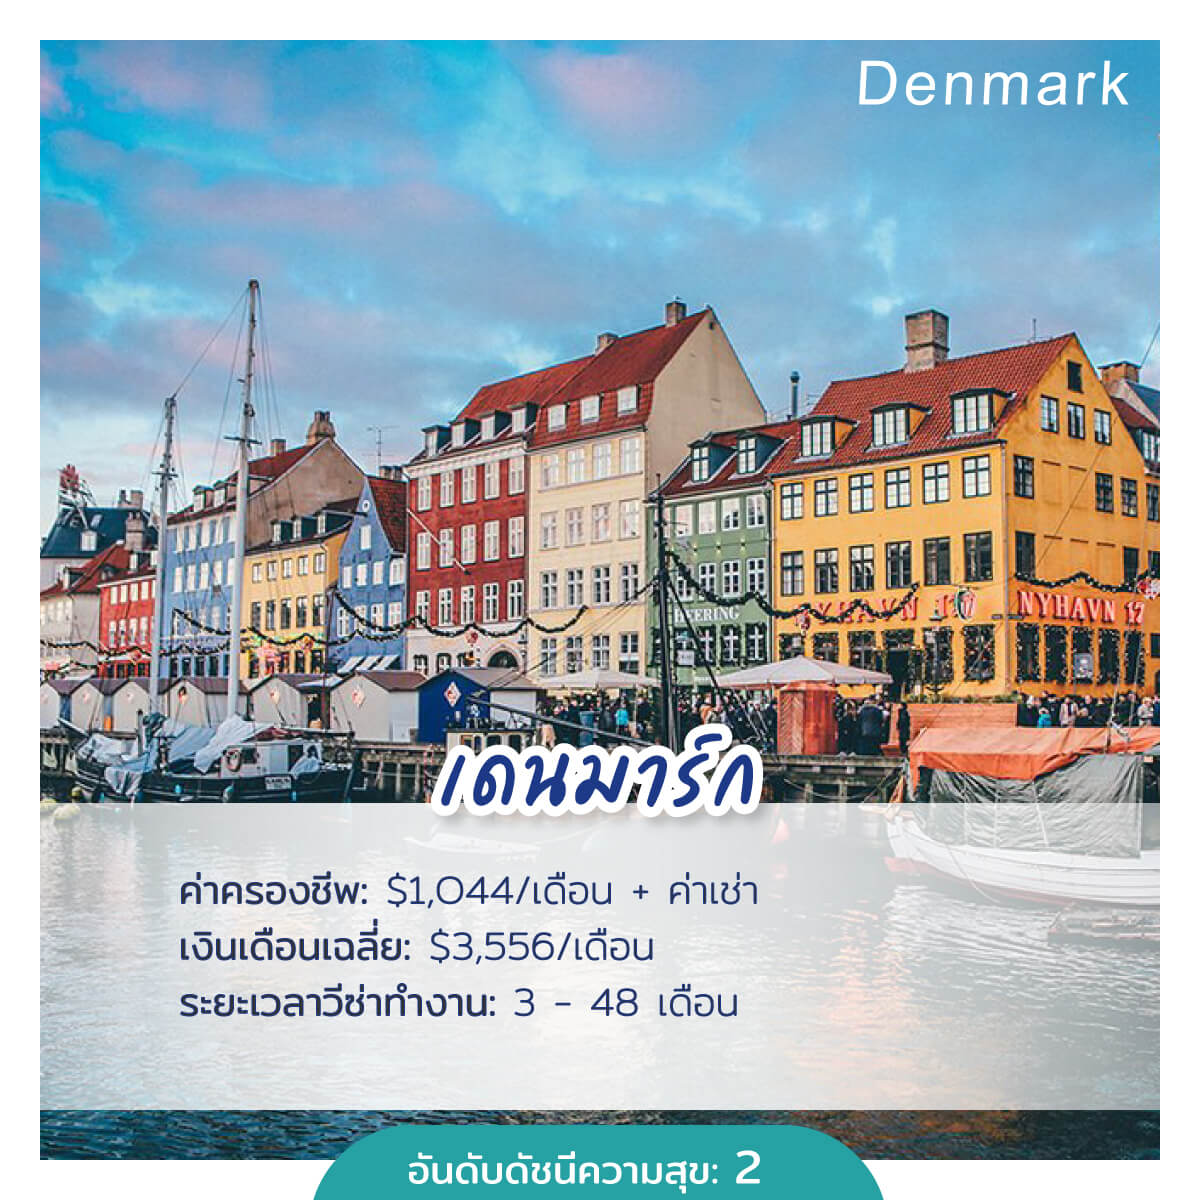 Work abroad Denmark ทํา งาน เดนมาร์ก  ราย ได้ เฉลี่ย  $975 / เดือน ระยะเวลาวีซ่าทำงาน กำหนดเป็นรายกรณี